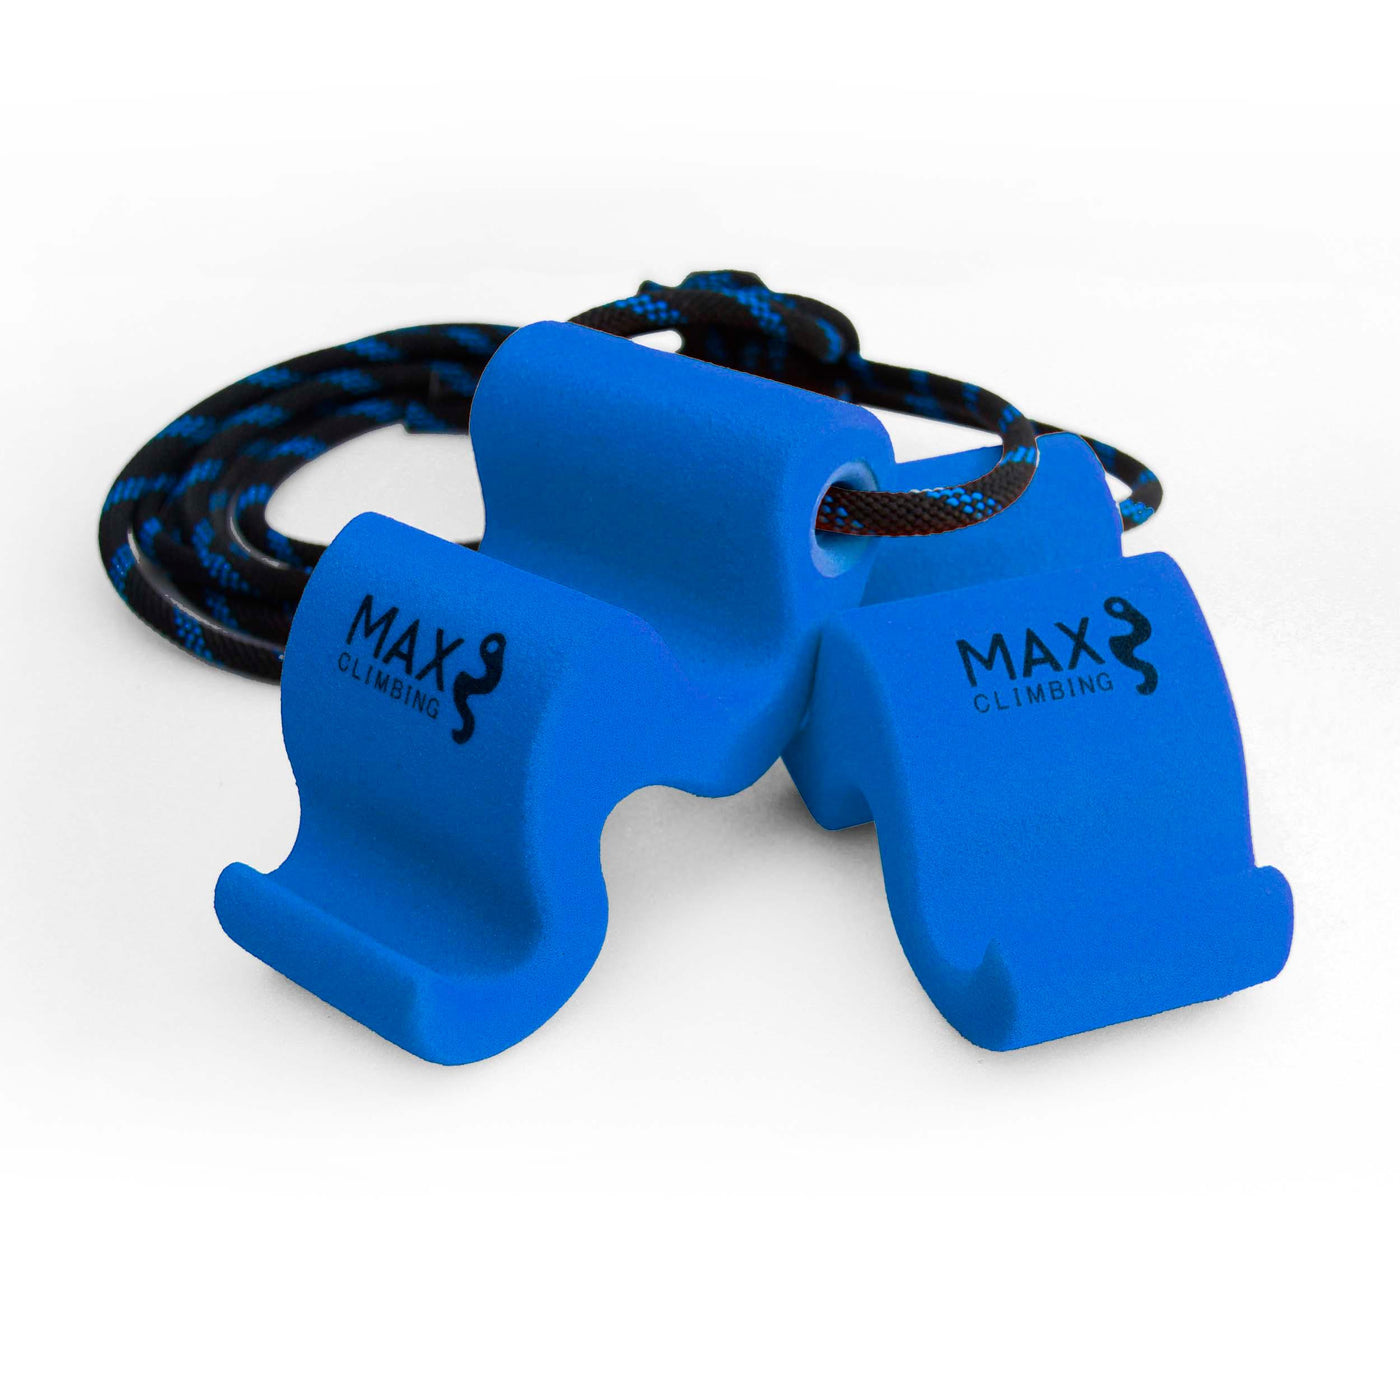 Maxgrip - Max Climbing - training tool - climbing blue